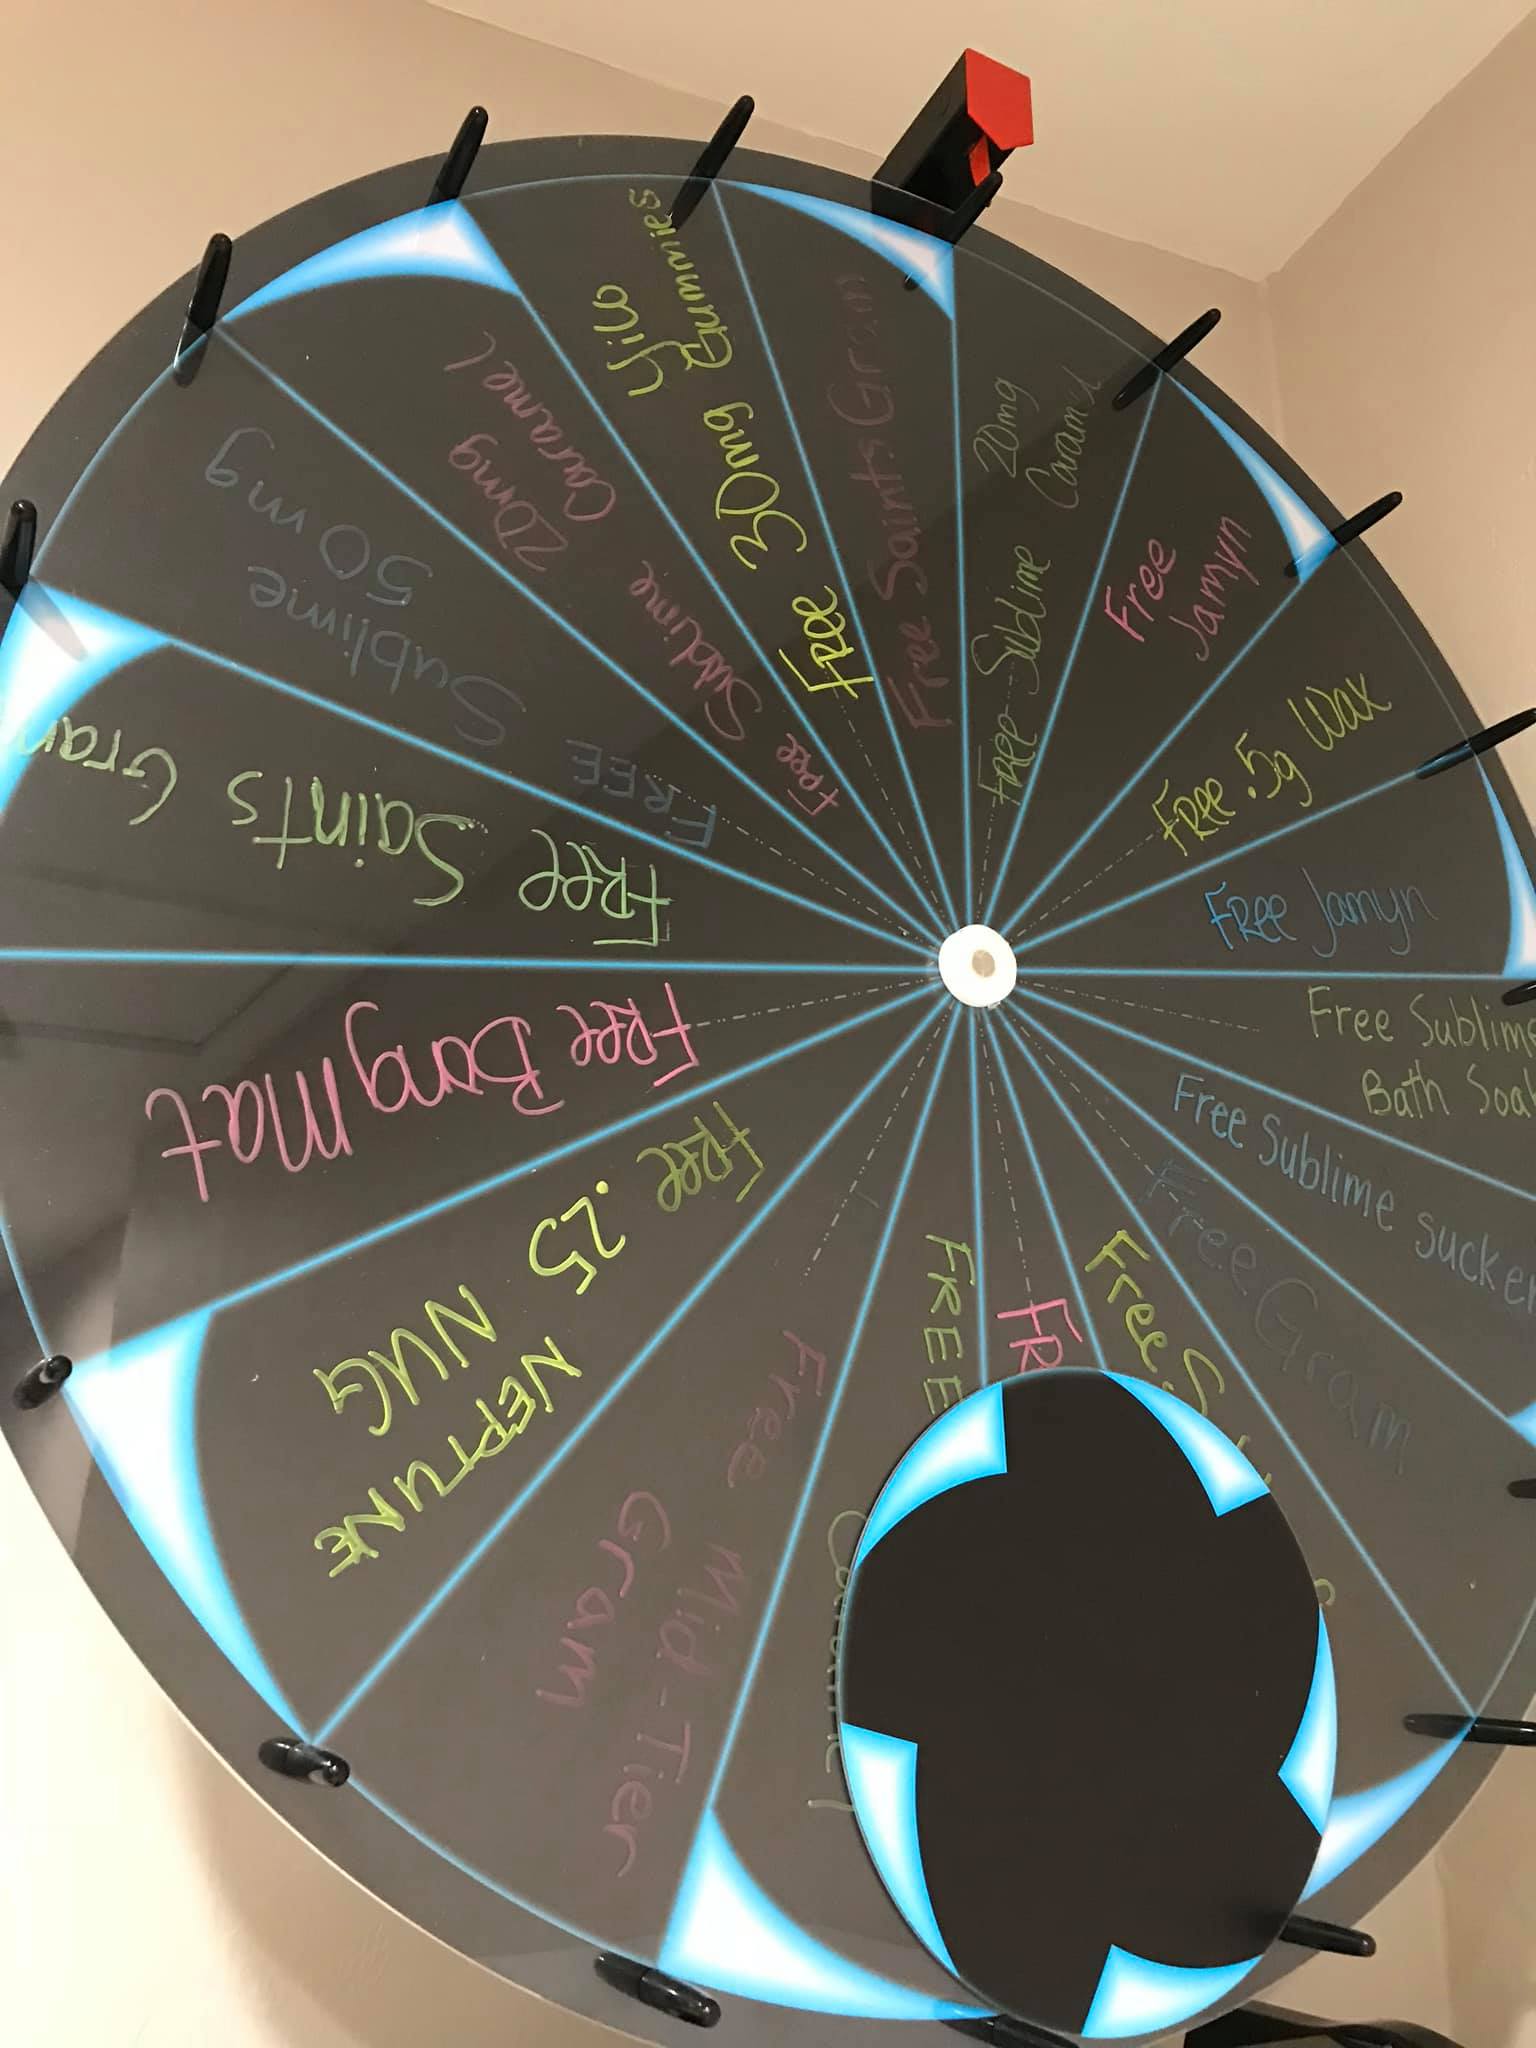 wheel of winners tucson saints 2019